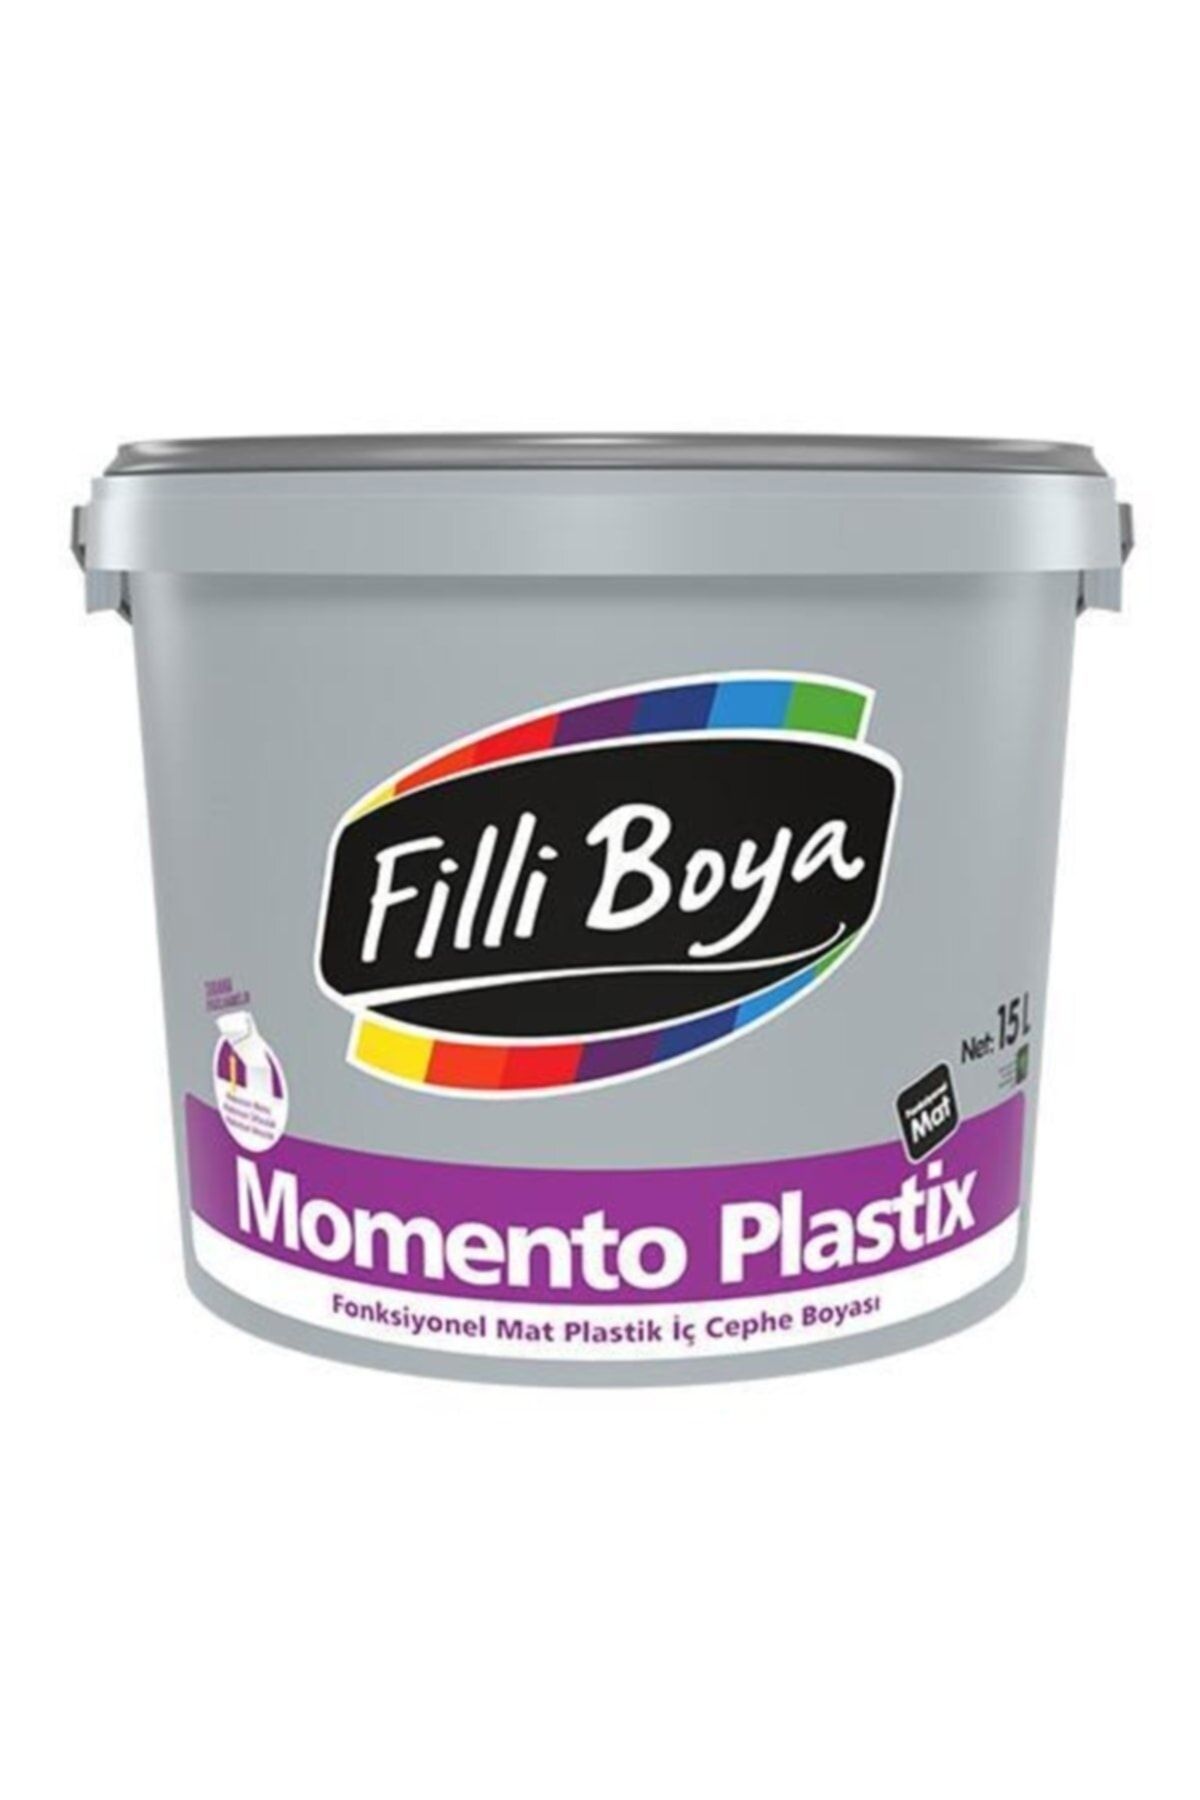 Filli Boya Momento Plastix 1.sınıf Iç Cephe Kokusuz Plastik Boya 2.5lt=3.5kg